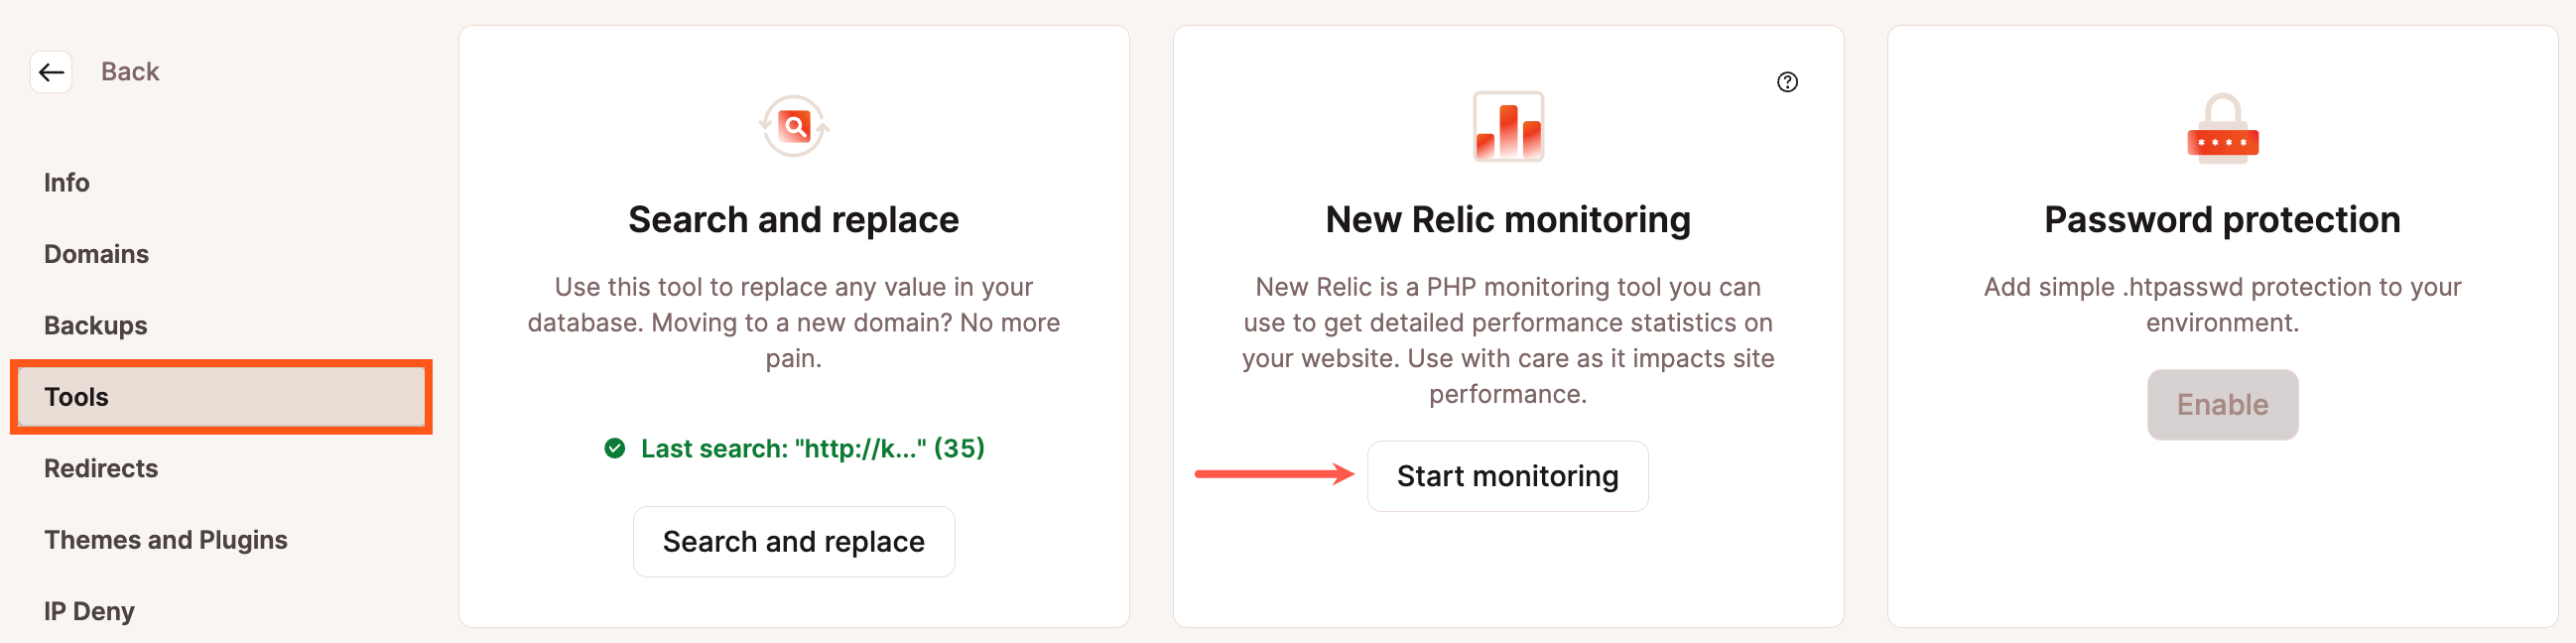 Start New Relic monitoring for WordPress in MyKinsta.